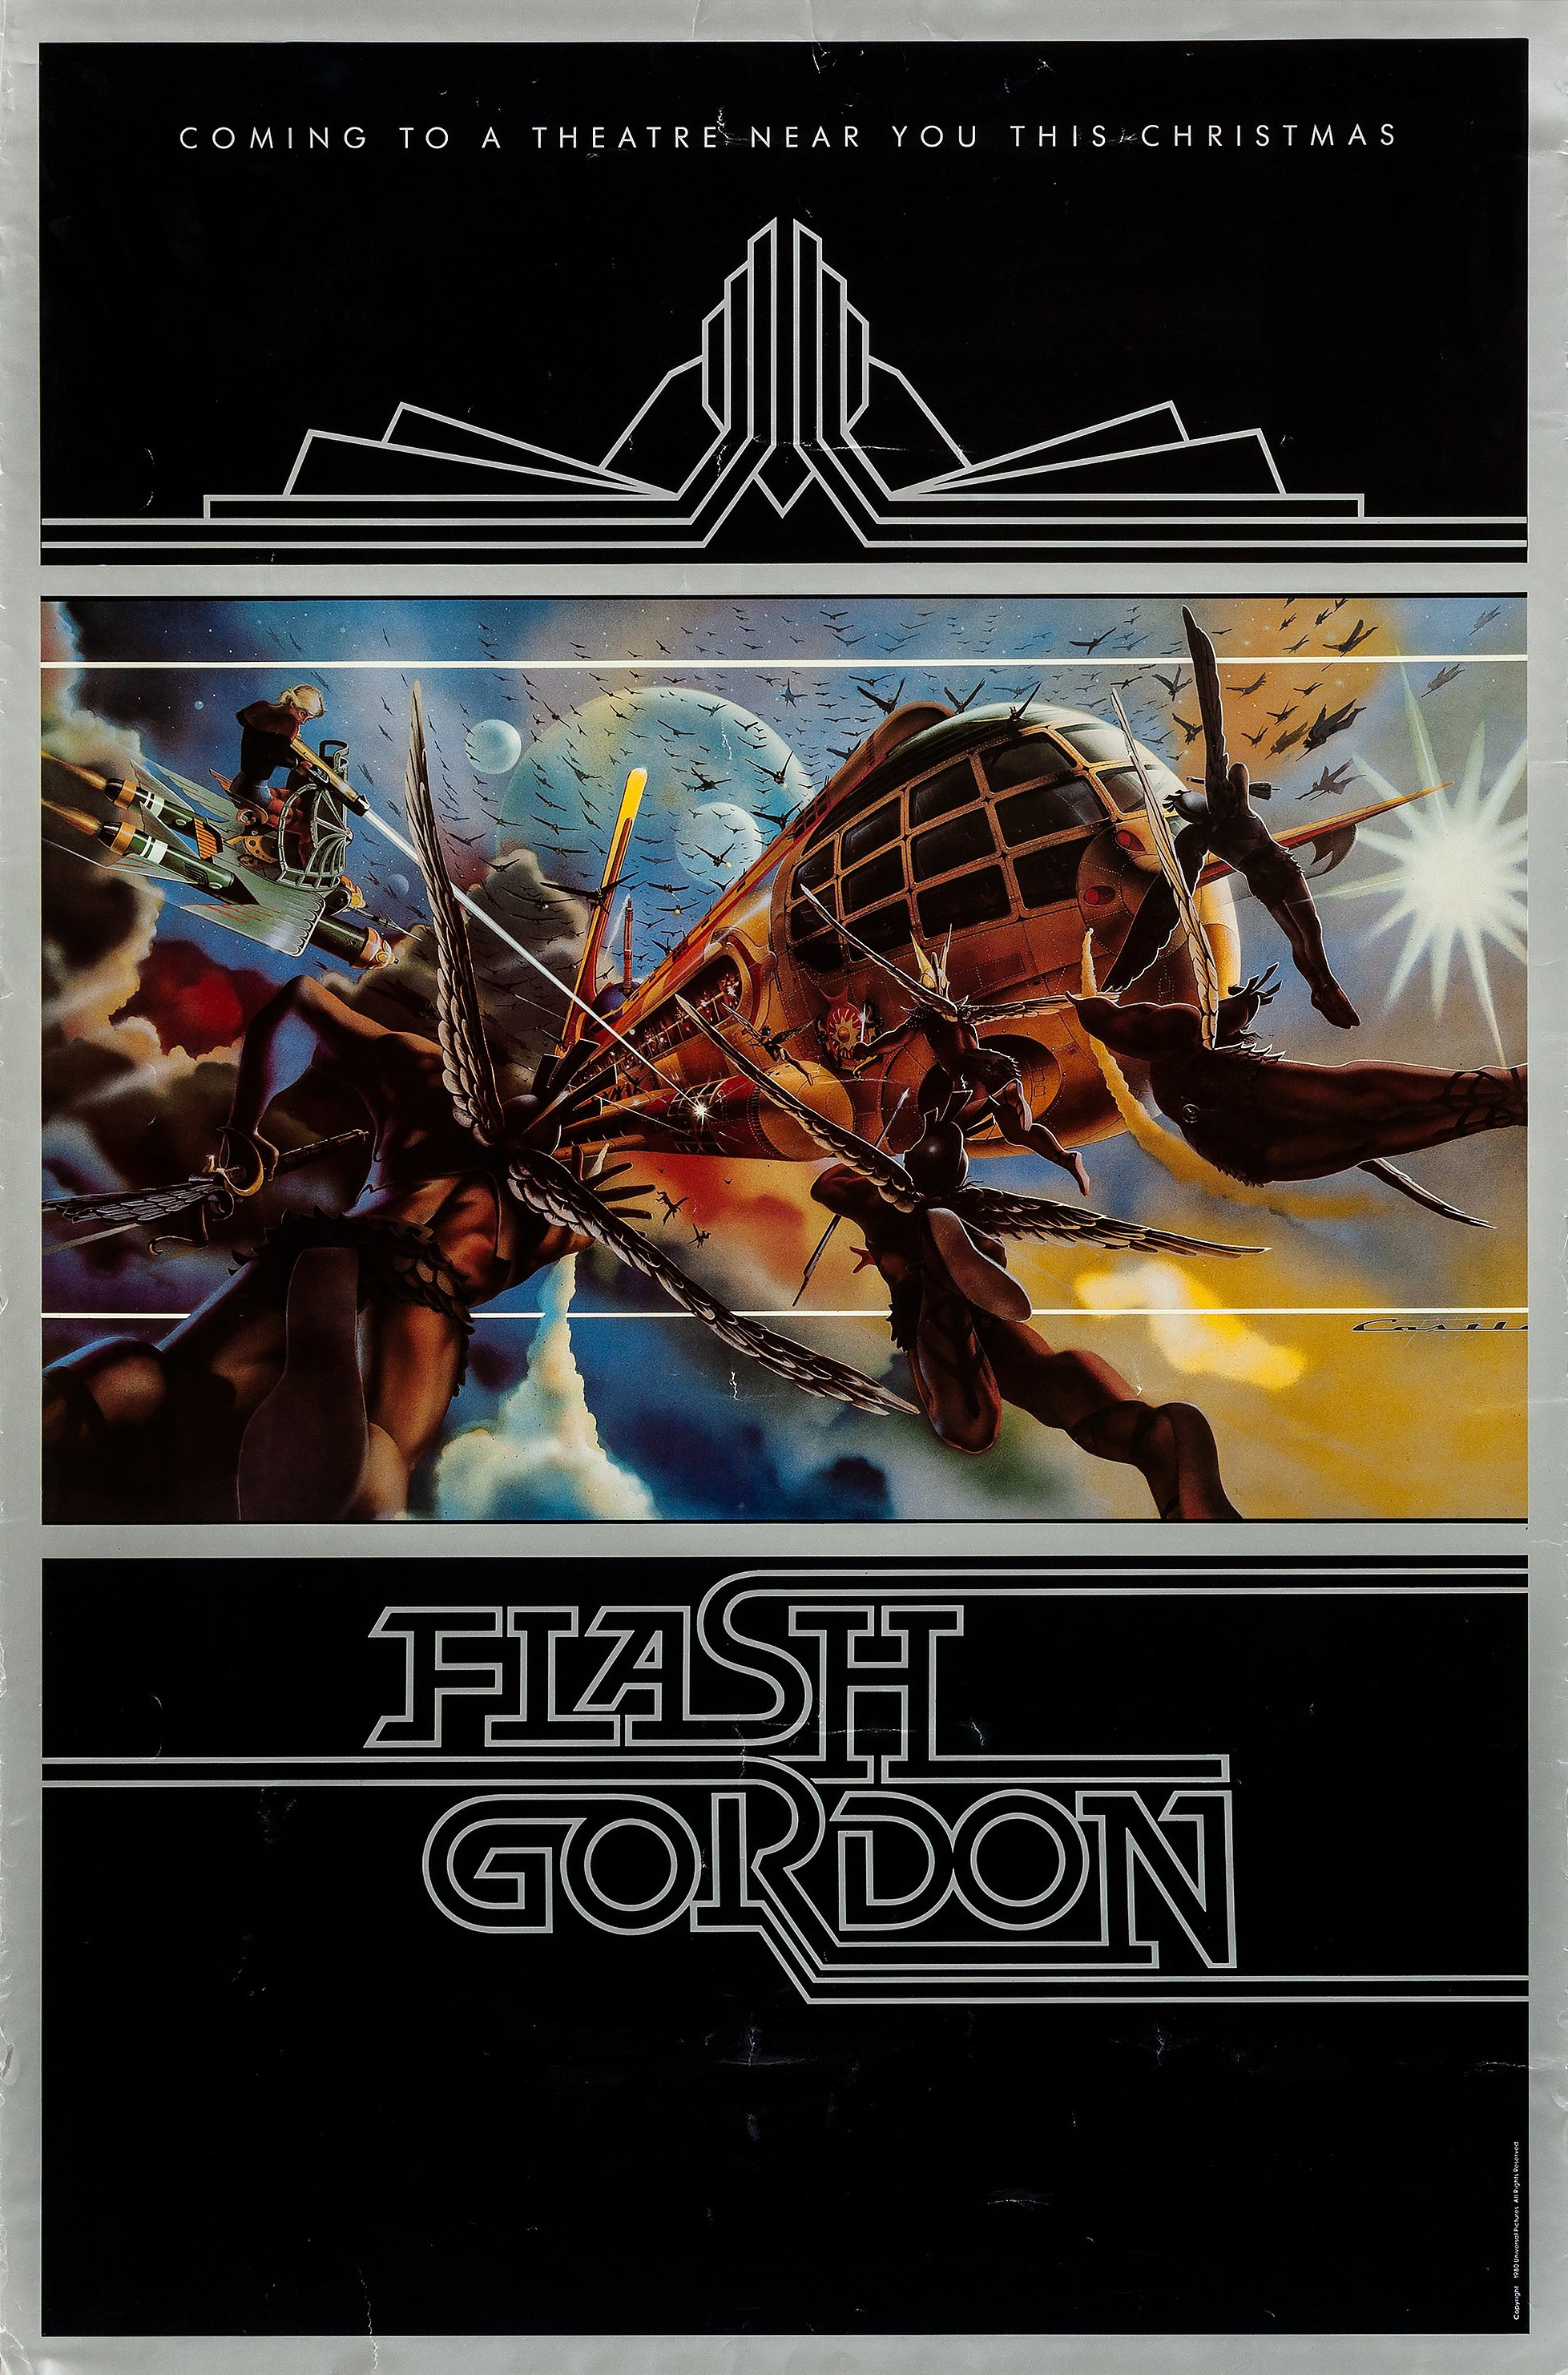 Mega Sized Movie Poster Image for Flash Gordon (#10 of 11)